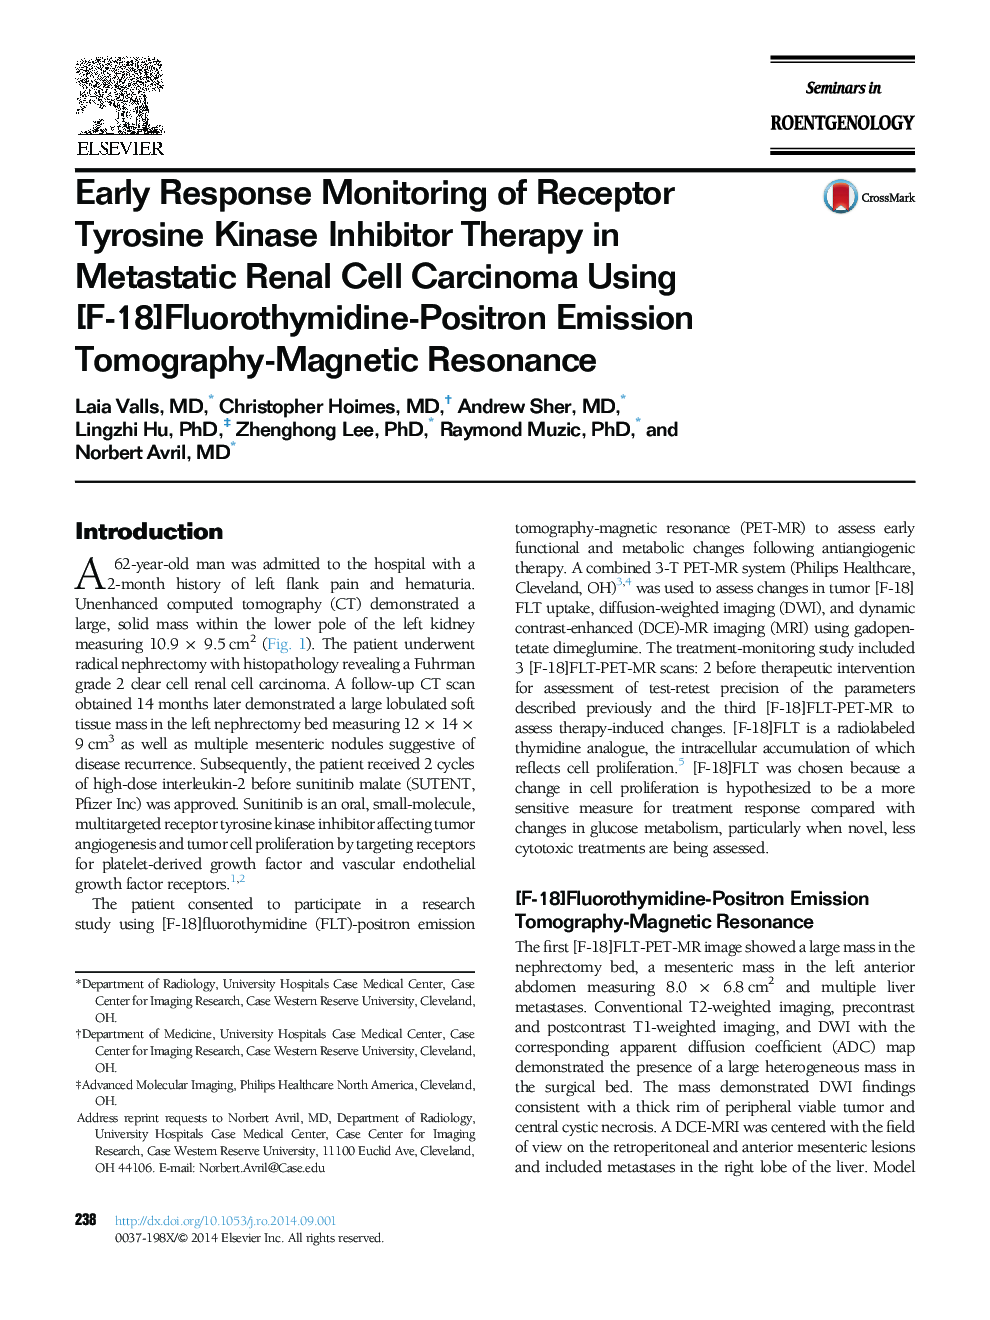 Early Response Monitoring of Receptor Tyrosine Kinase Inhibitor Therapy in Metastatic Renal Cell Carcinoma Using [F-18]Fluorothymidine-Positron Emission Tomography-Magnetic Resonance